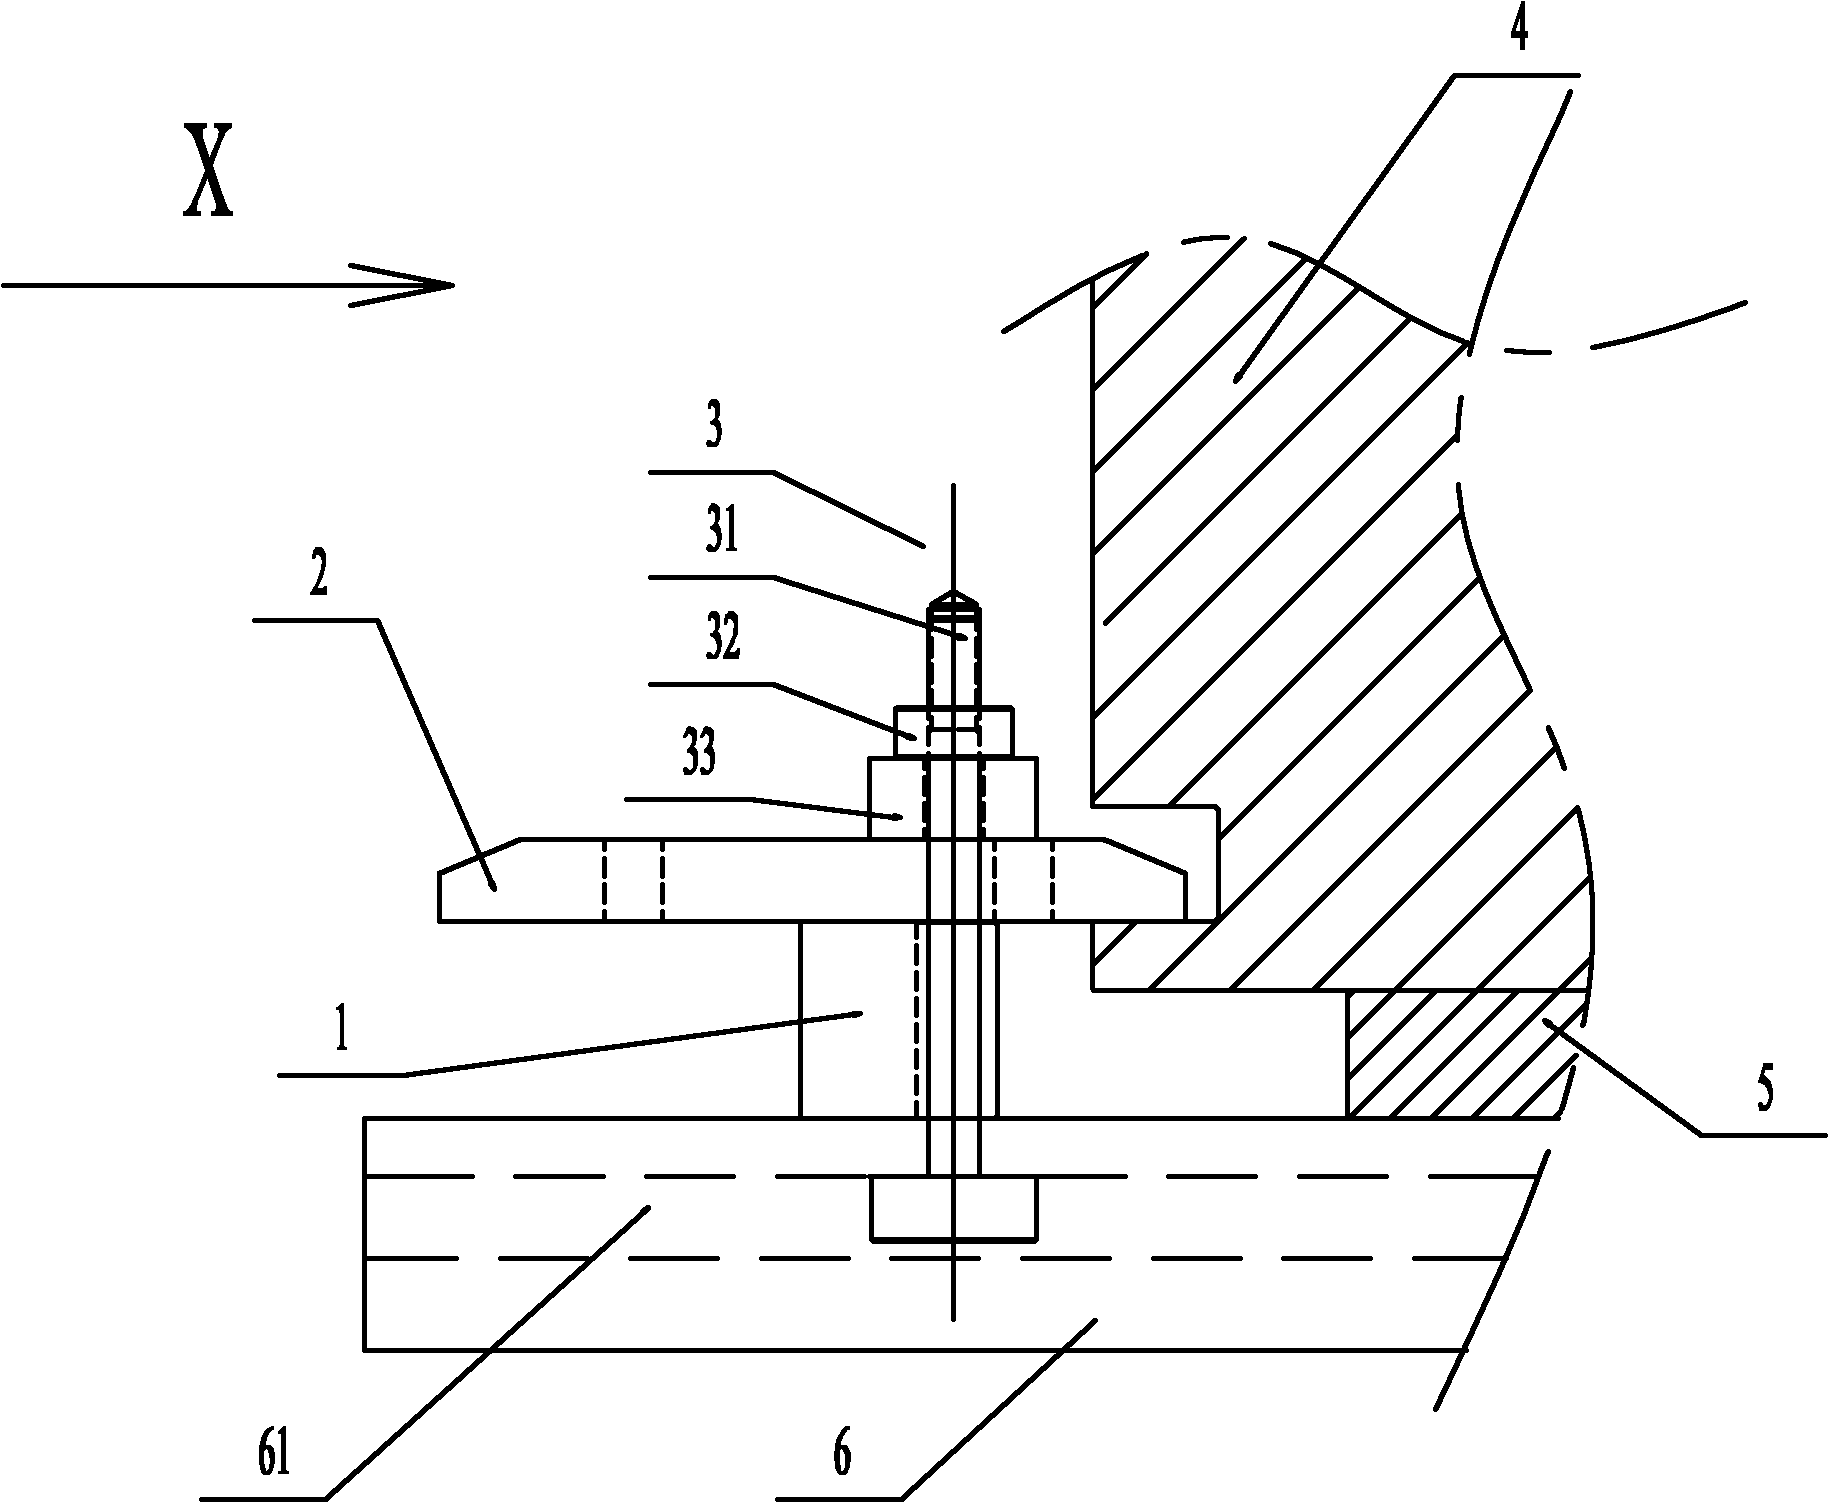 Pressure plate clamping mechanism